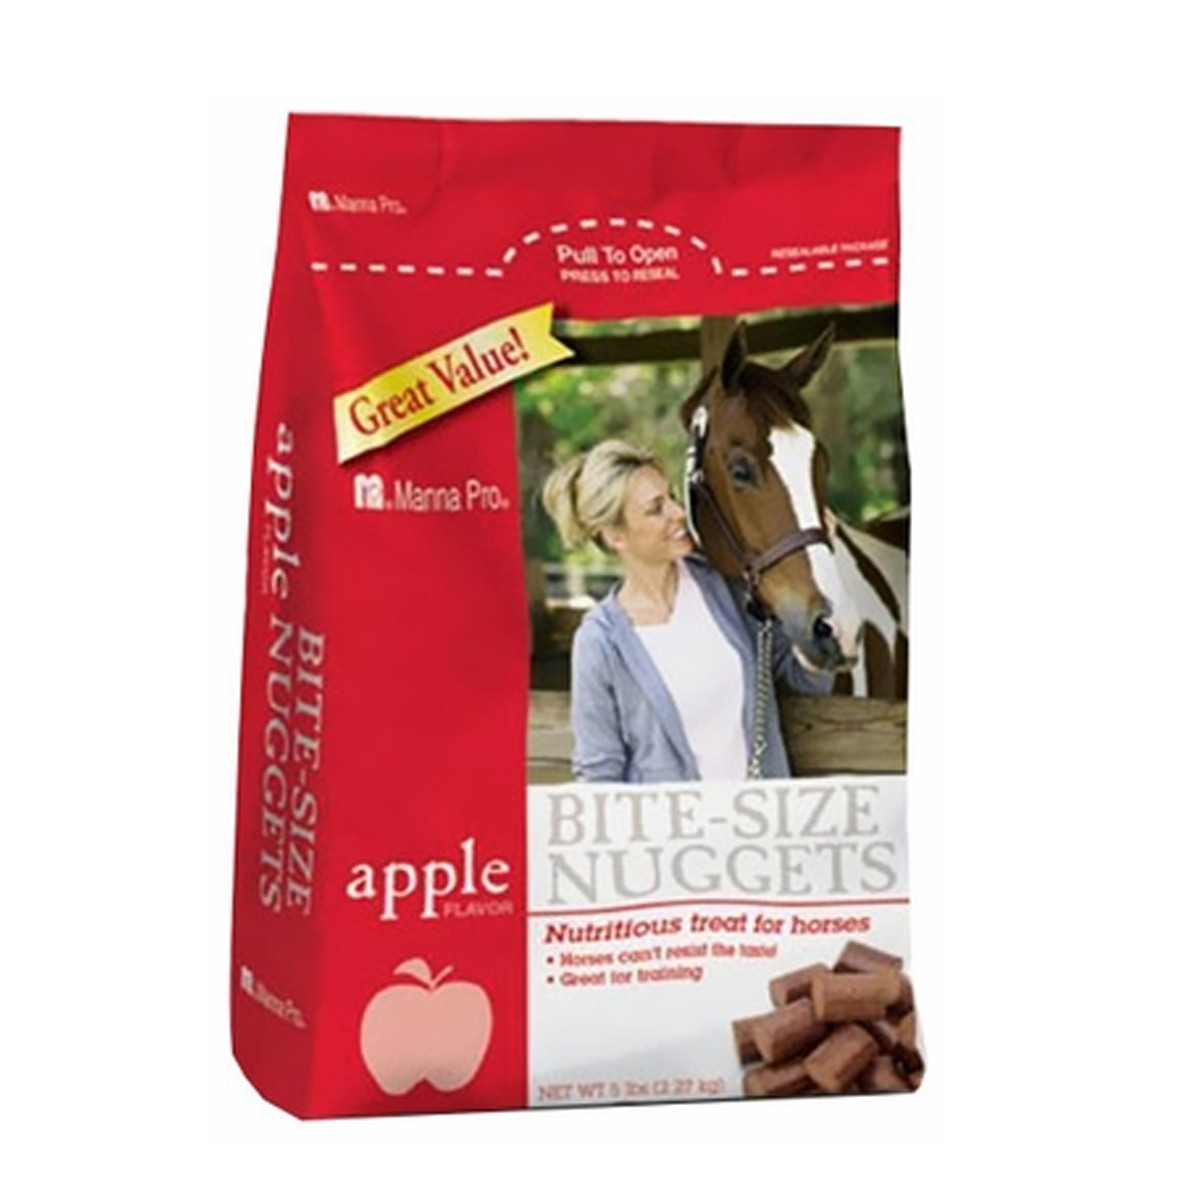 Bite-Sized Apple Nuggets for Horses - Apple - 5 lb